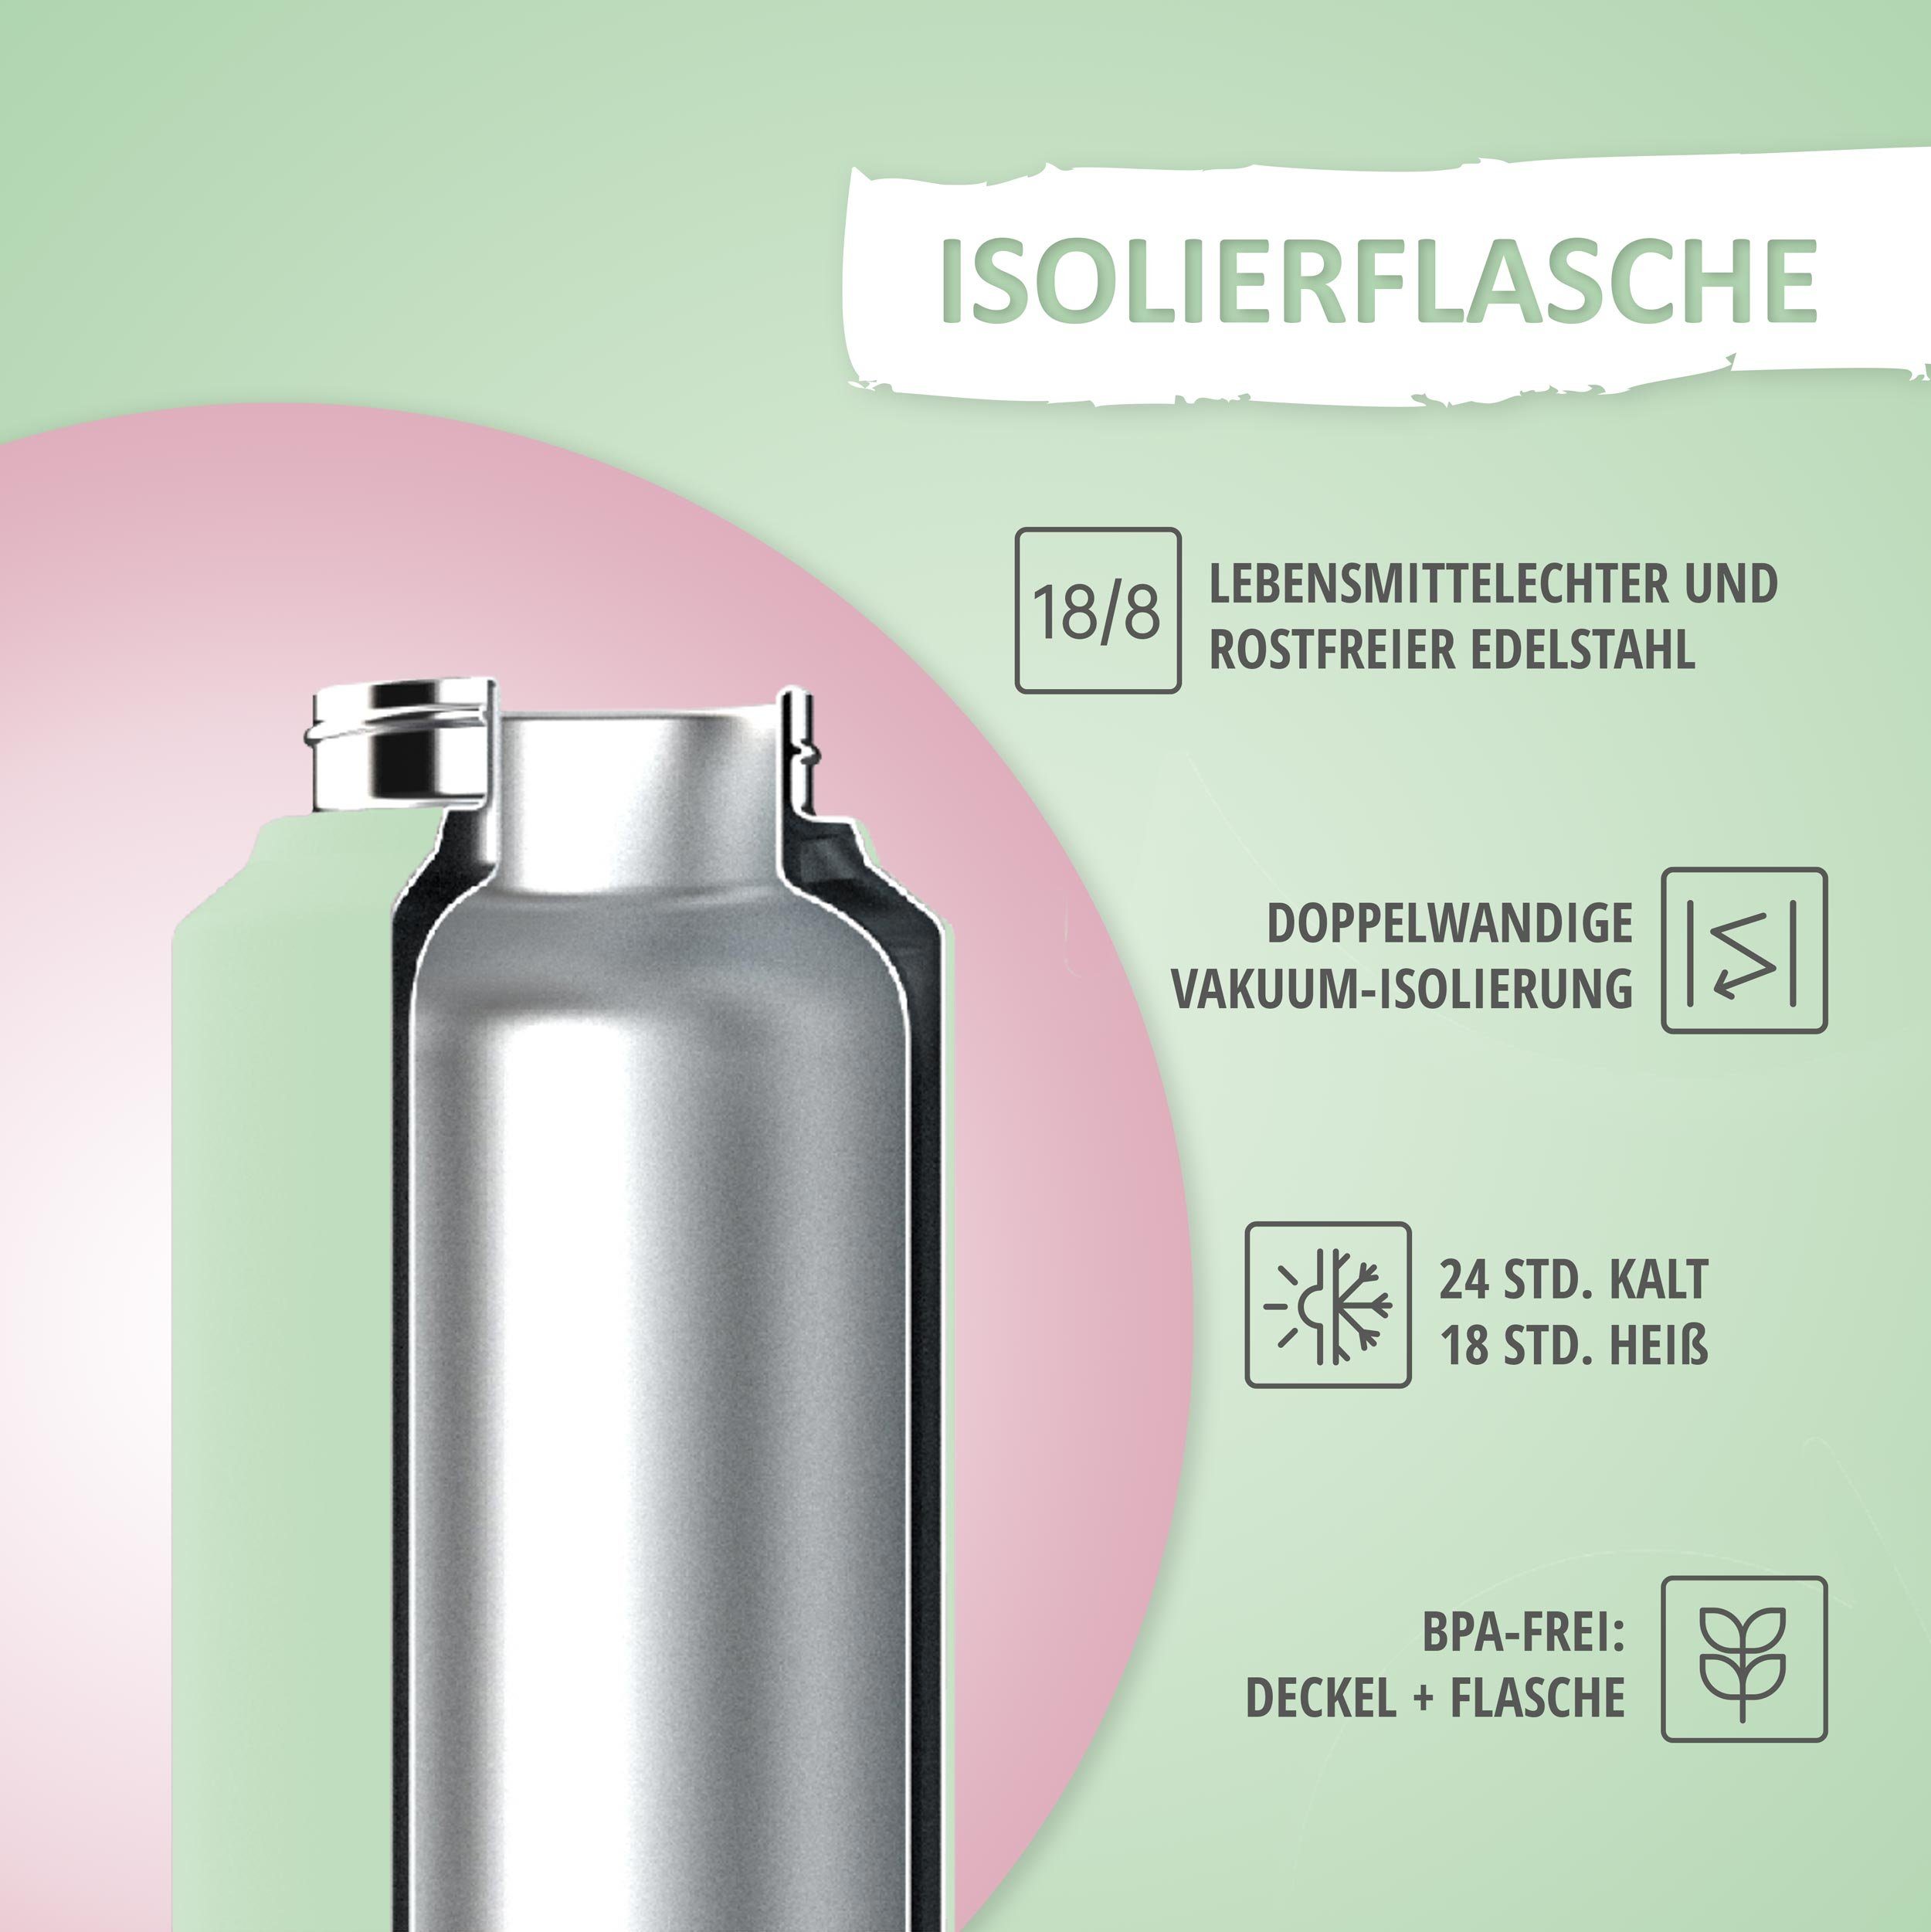 Light Inhalt Edelstahl, auslaufsicher, 500ml oder Isolierflasche 350ml Green/Rosa Trinkflasche, Inhalt BPA-frei, kyds